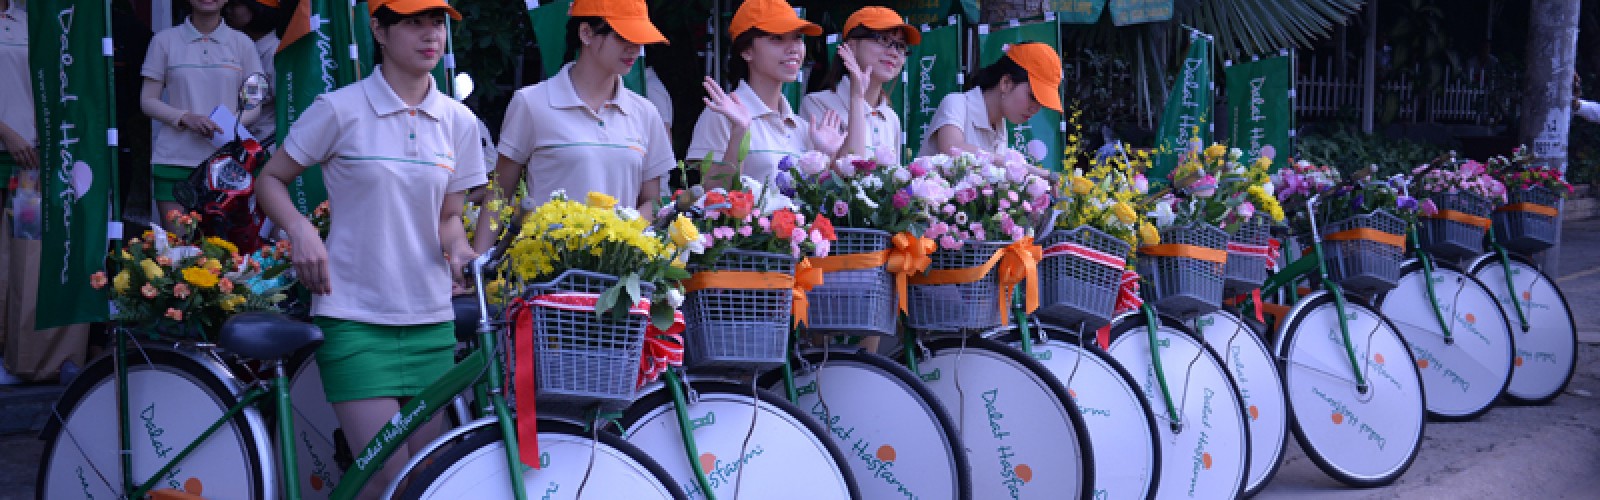 Press release - Dalat Hasfarm opens new flower shop in Bien Hoa City.